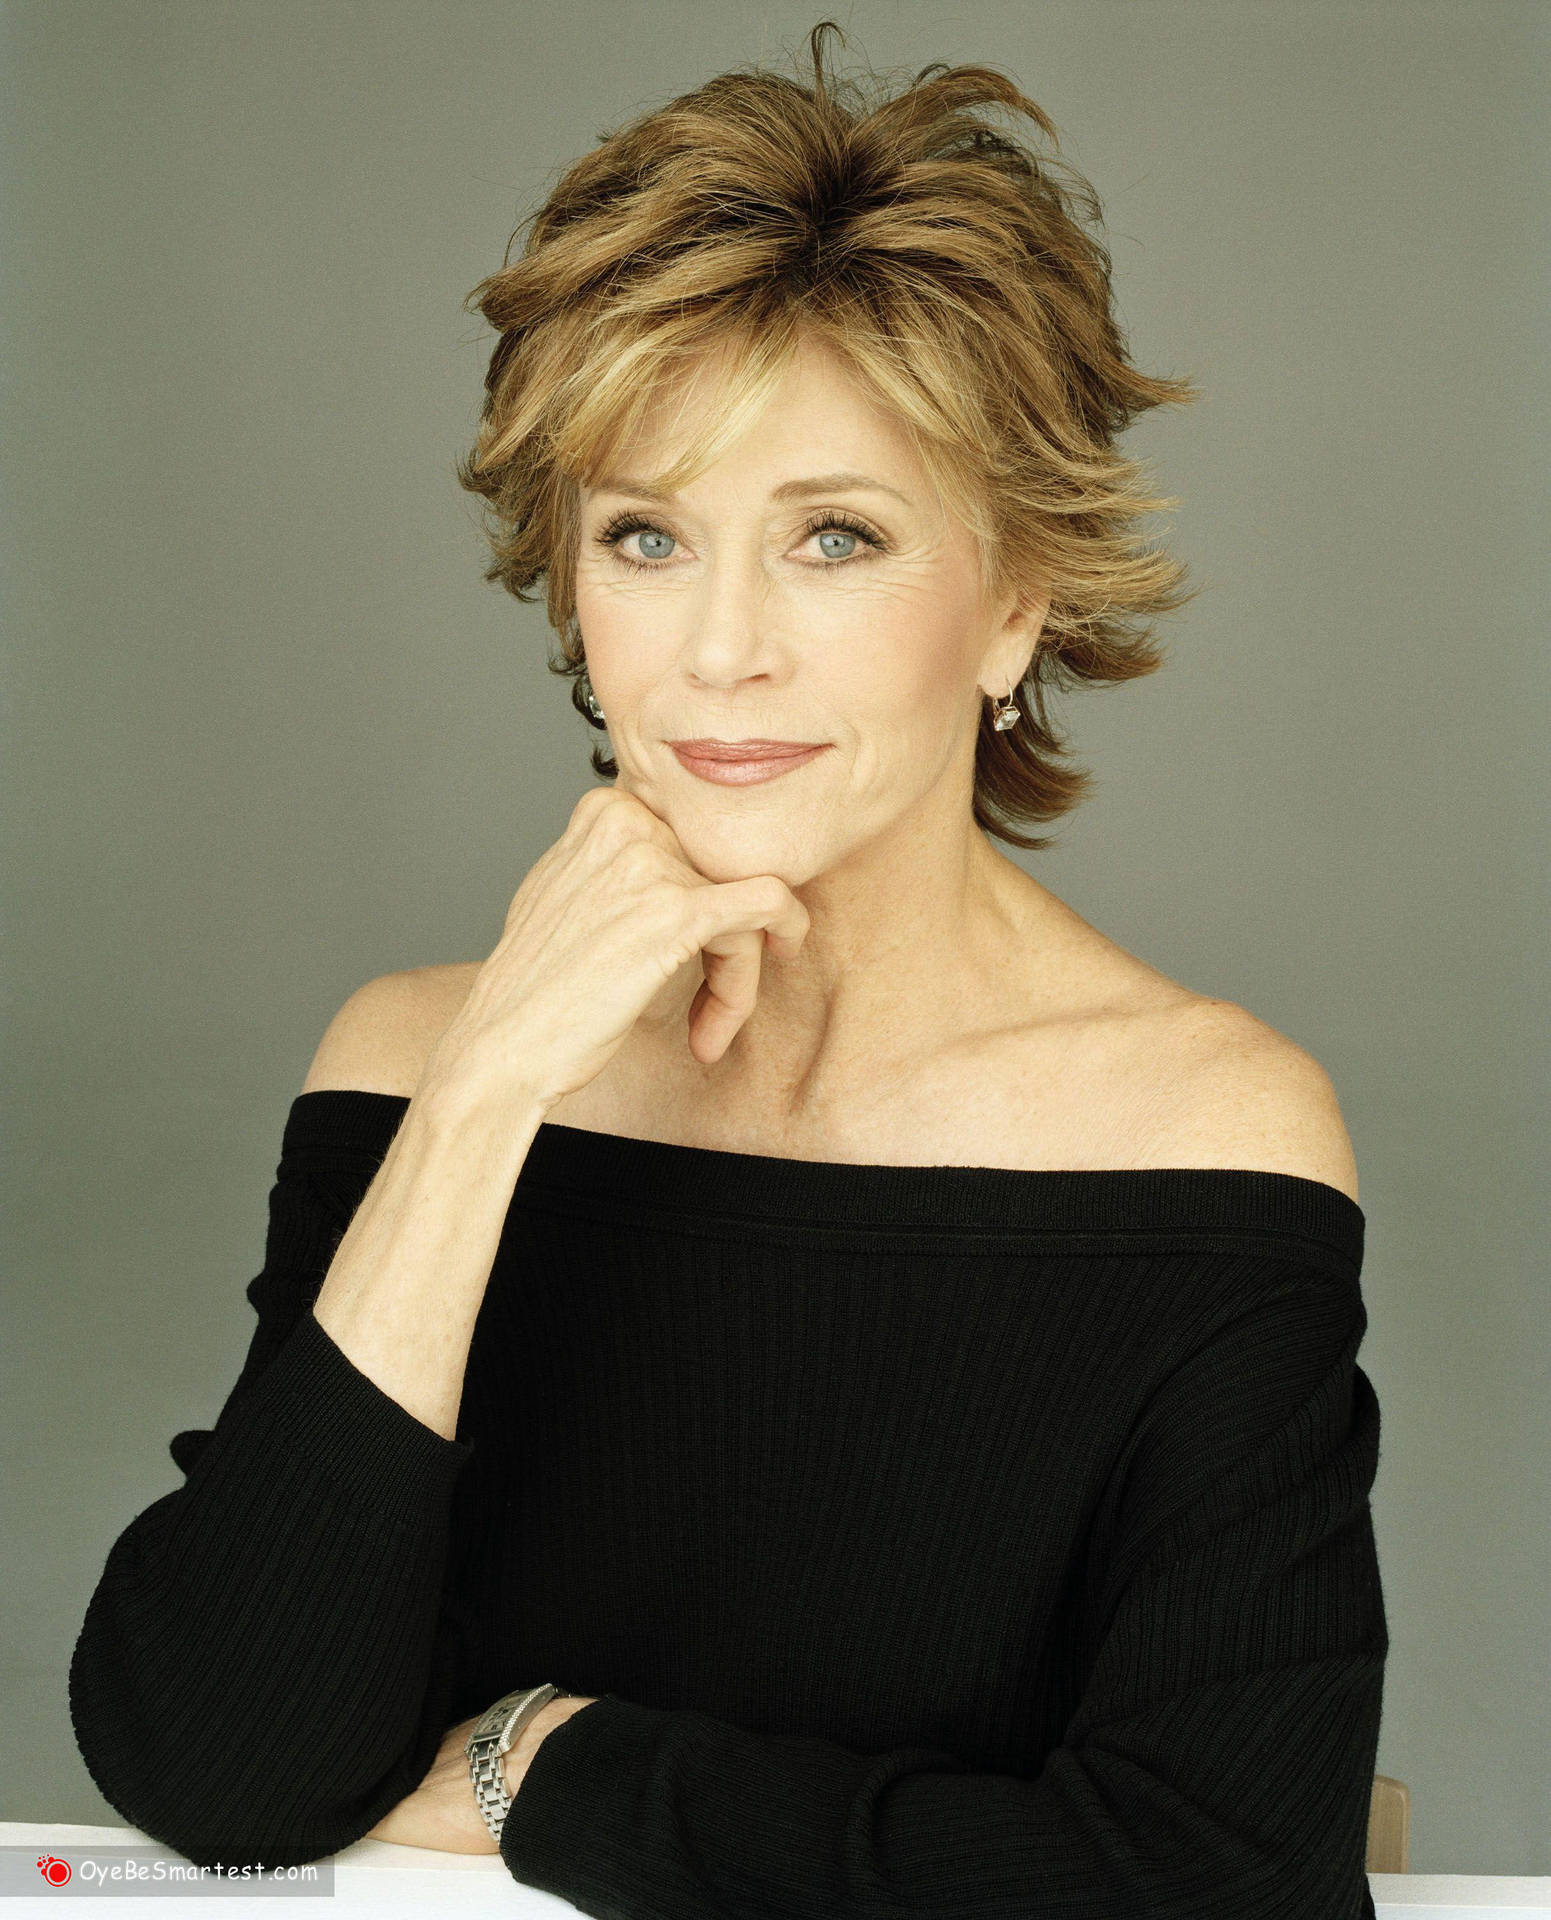 Elegance Personified - Jane Fonda Wallpaper